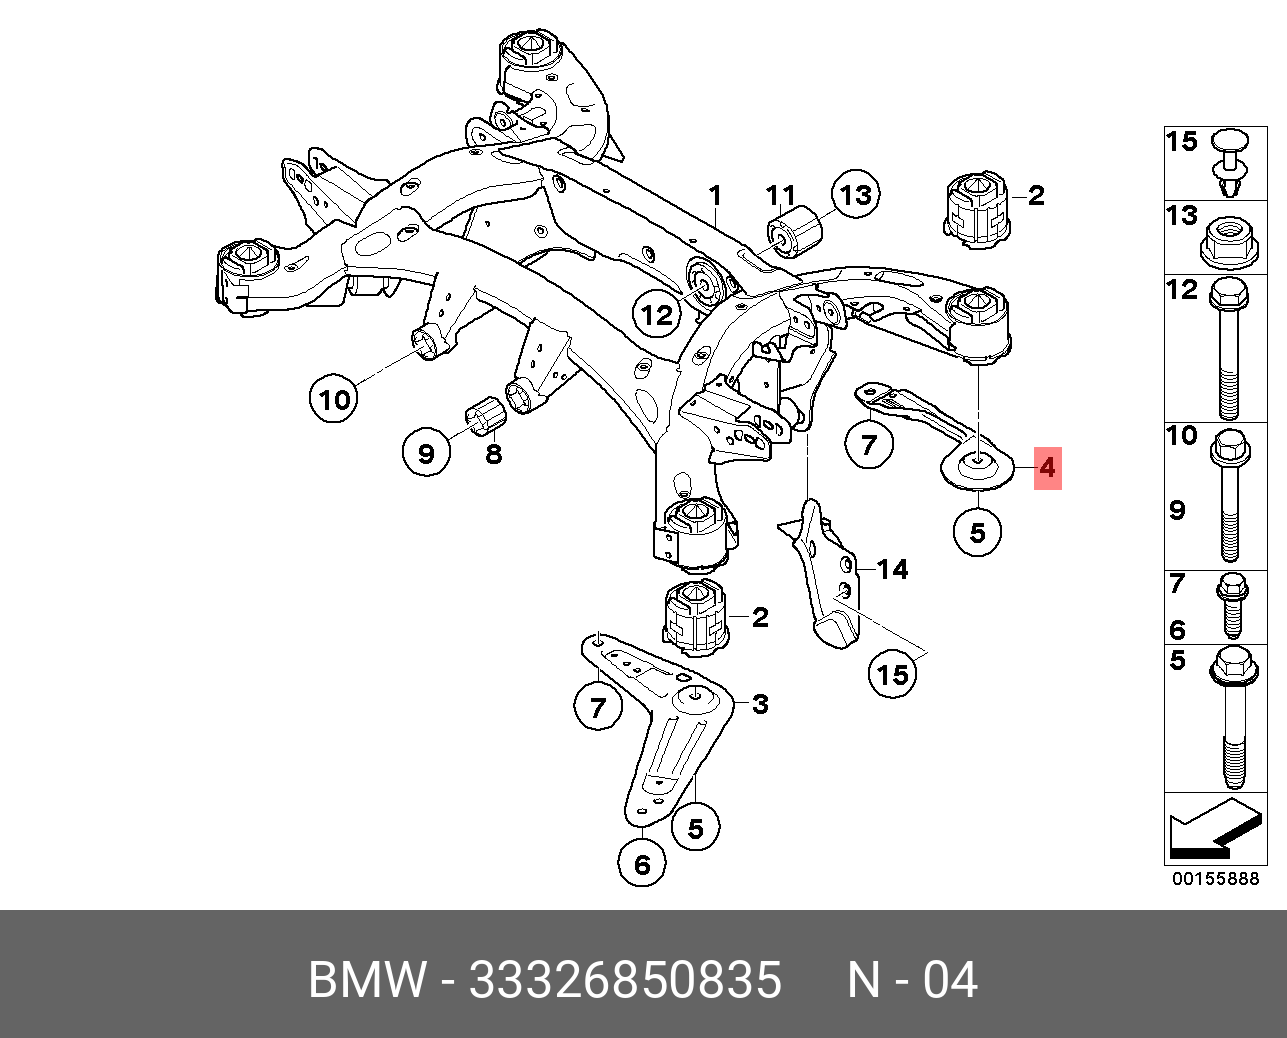 Подвеска х5 е53. Задняя подвеска БМВ х5 е70 схема. Задняя подвеска BMW x5 e53 схема. Задняя подвеска BMW x5 e70. Сайлентблок заднего подрамника BMW x5 e53.